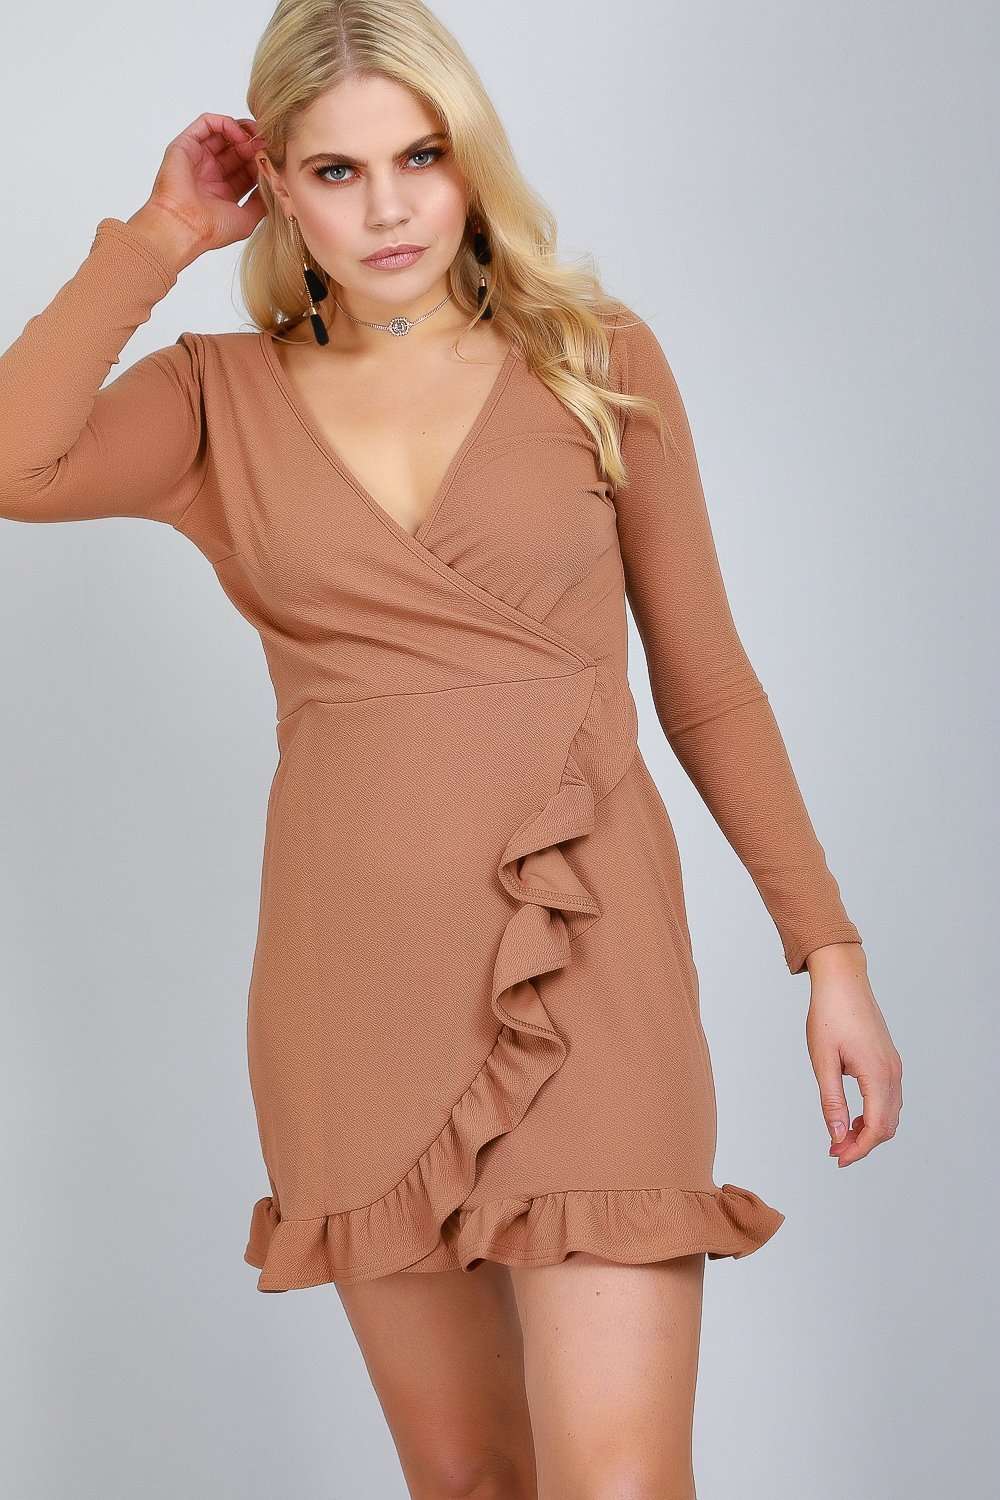 Casie Long Sleeve Frilly Mini Dress - bejealous-com